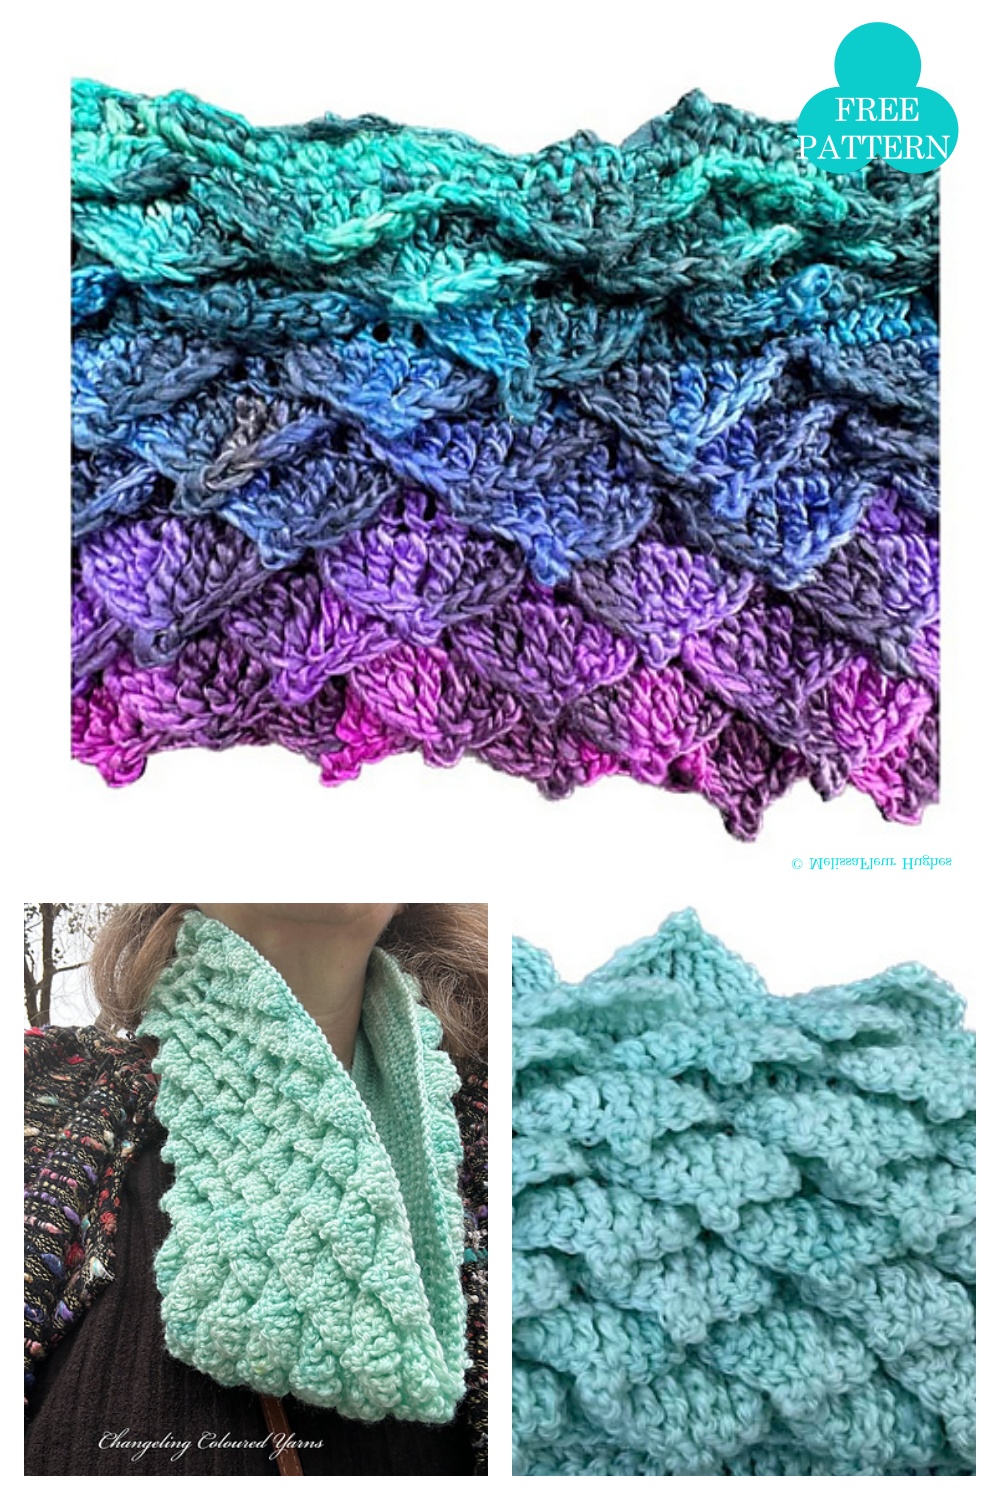 8 Affinity Cowl Crochet Patterns – FREE